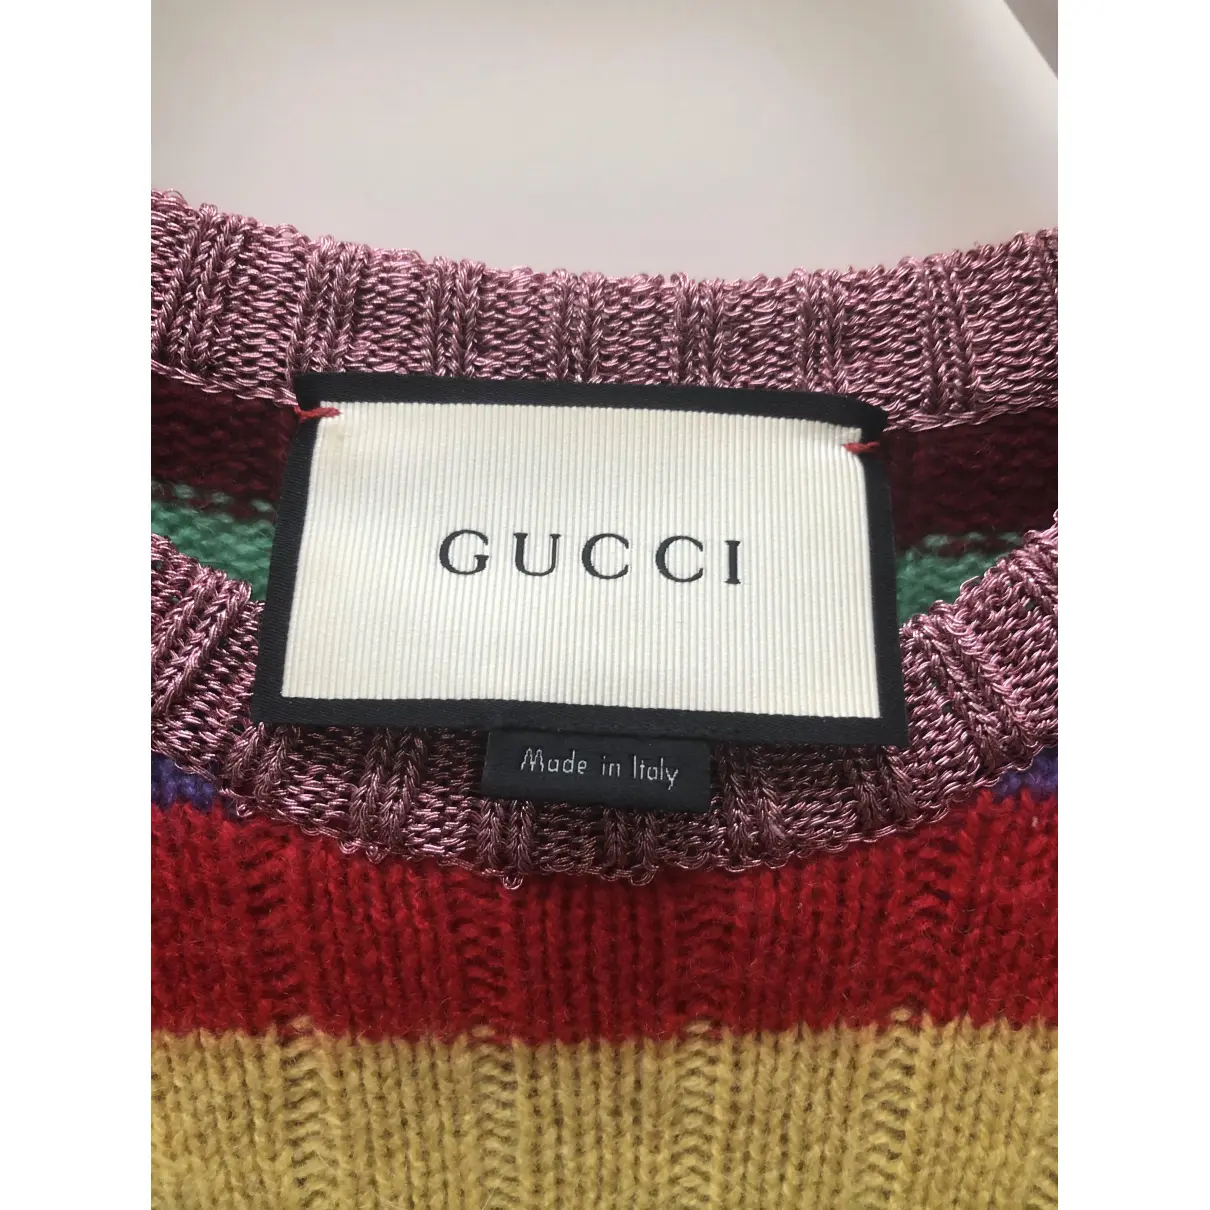 Buy Gucci Cashmere jumper online